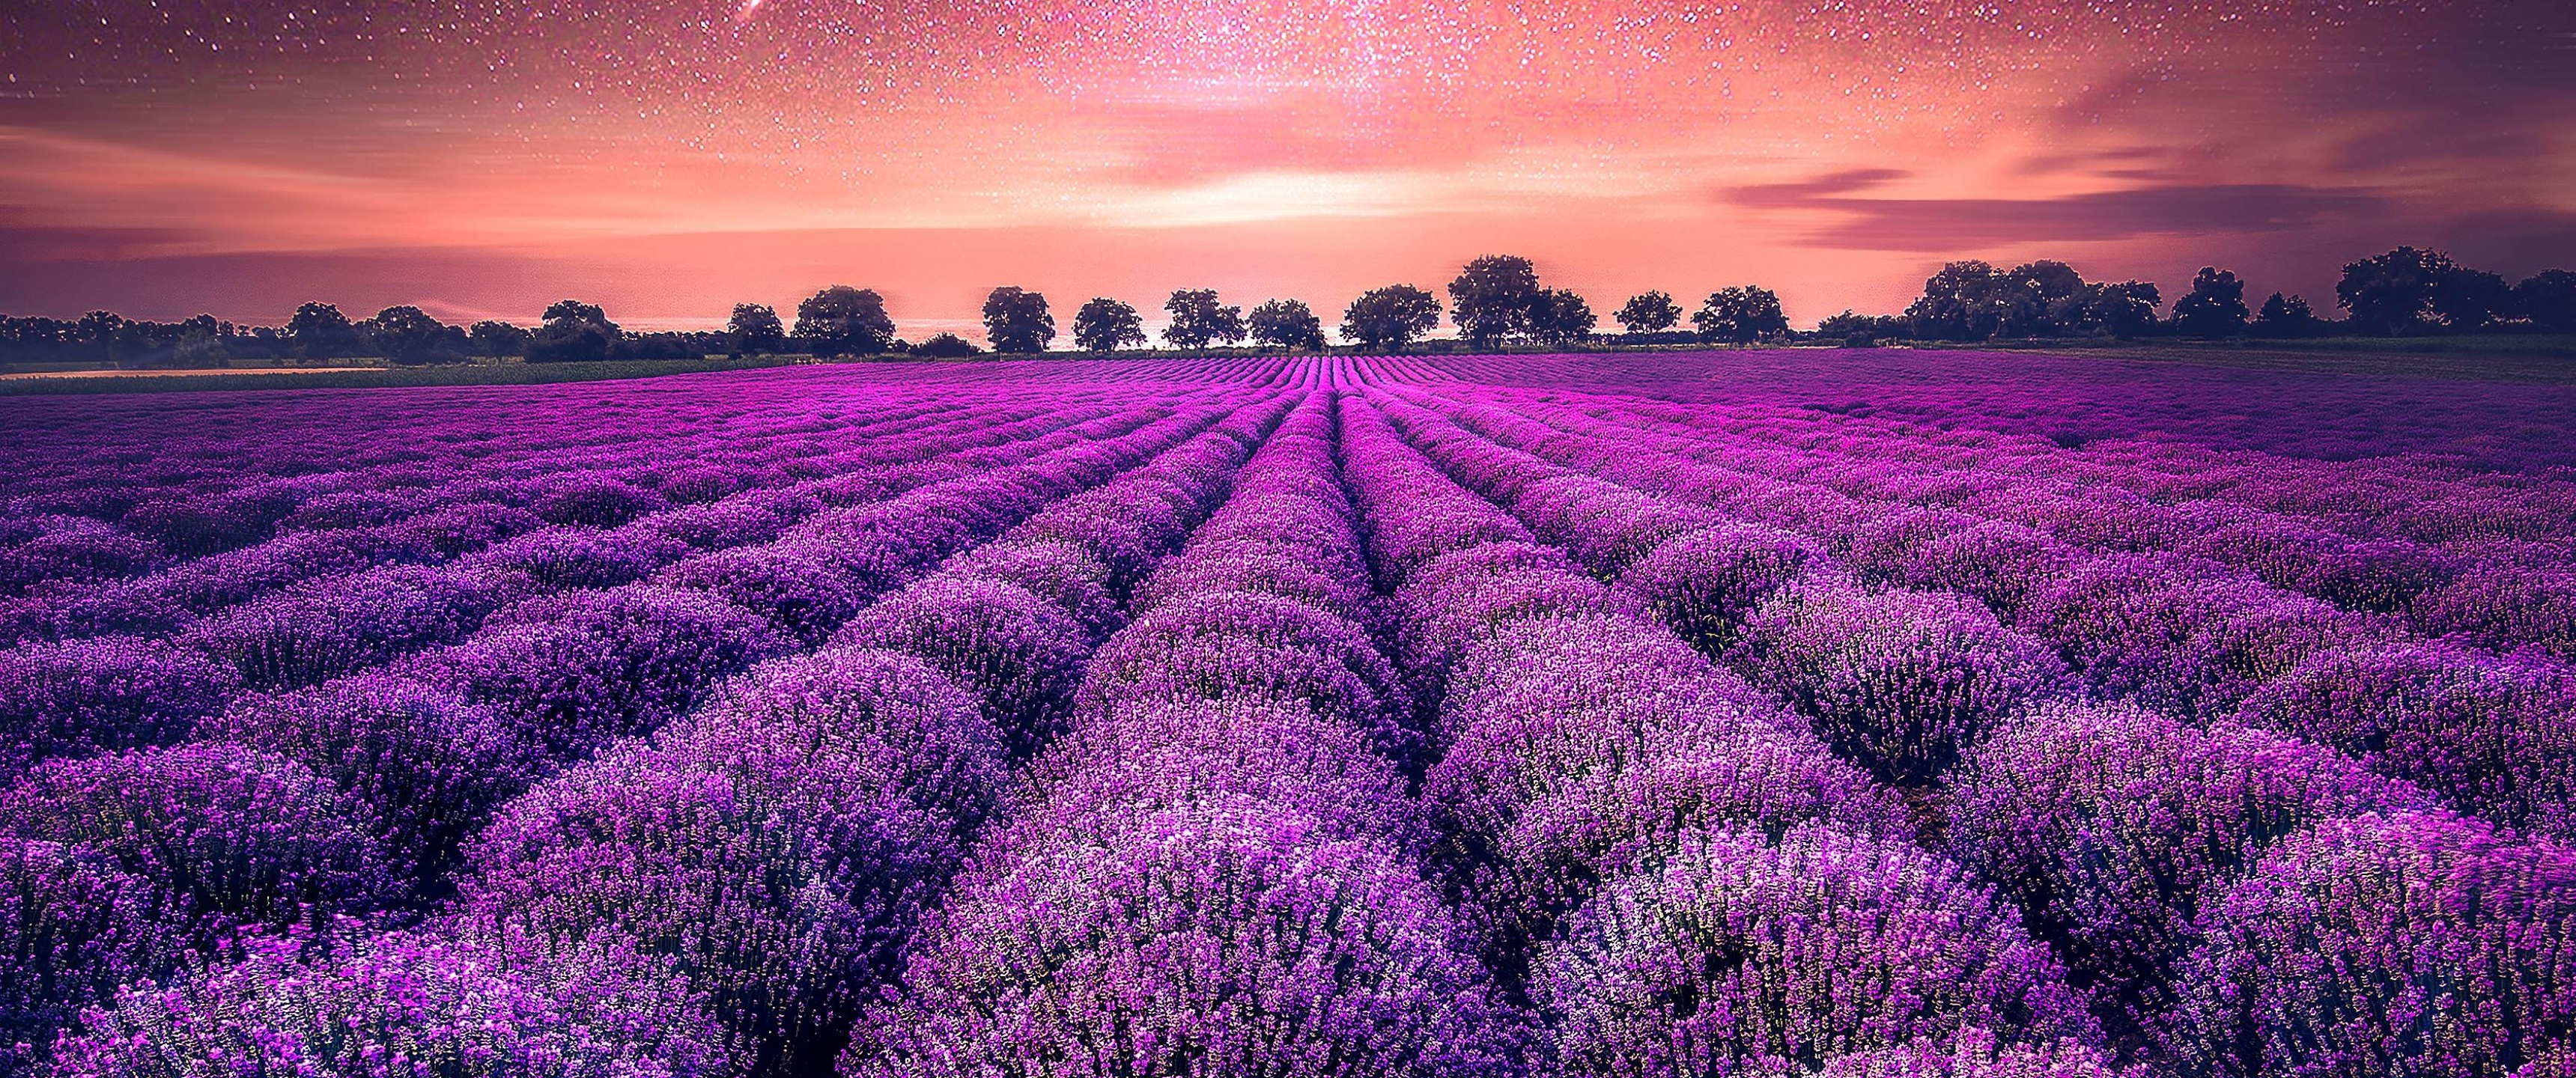 Farm: Lavender fields, Sunset, Natural landscape. 3440x1440 Dual Screen Wallpaper.